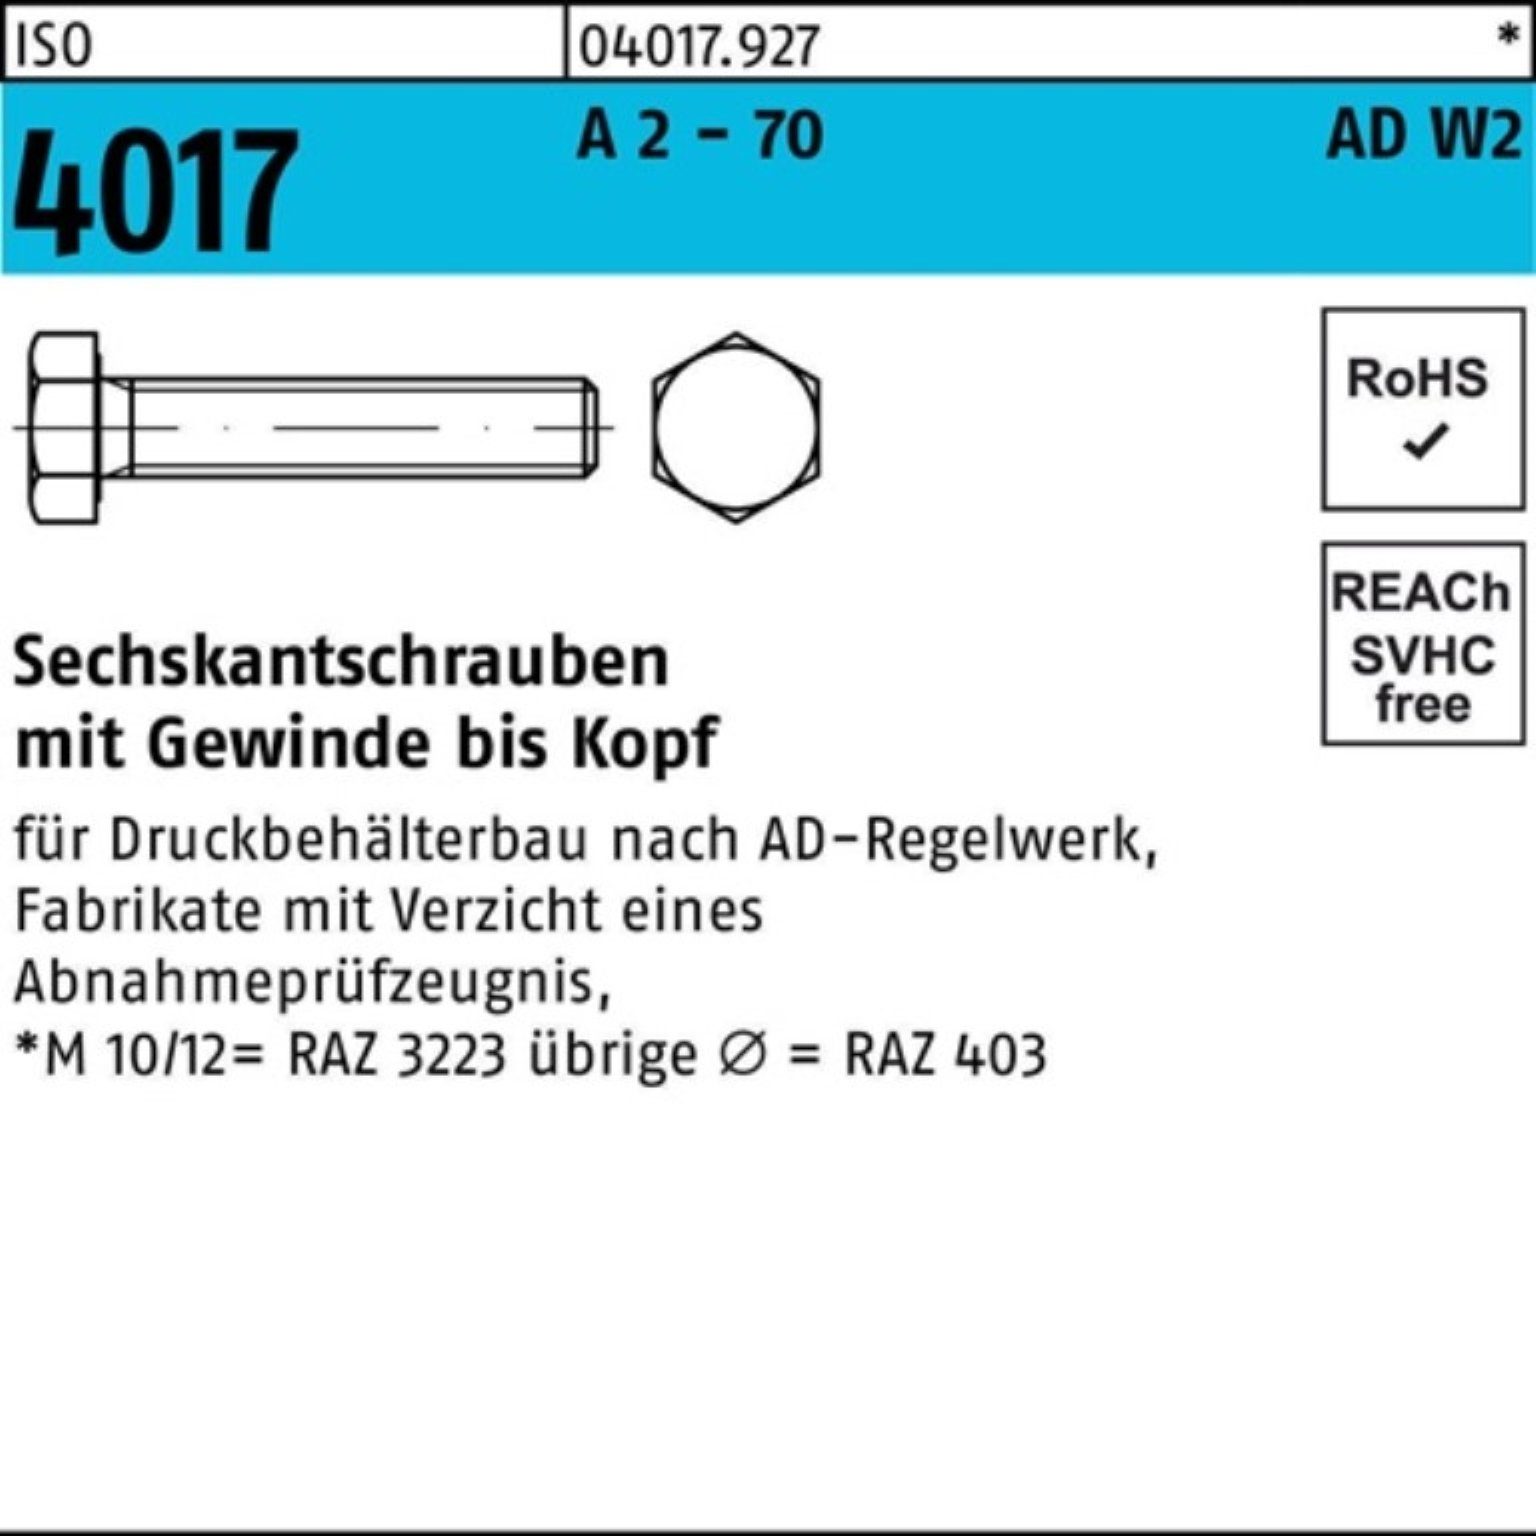 Bufab Sechskantschraube 100er Pack Sechskantschraube ISO 4017 VG M16x 40 A 2 - 70 AD-W2 25 St